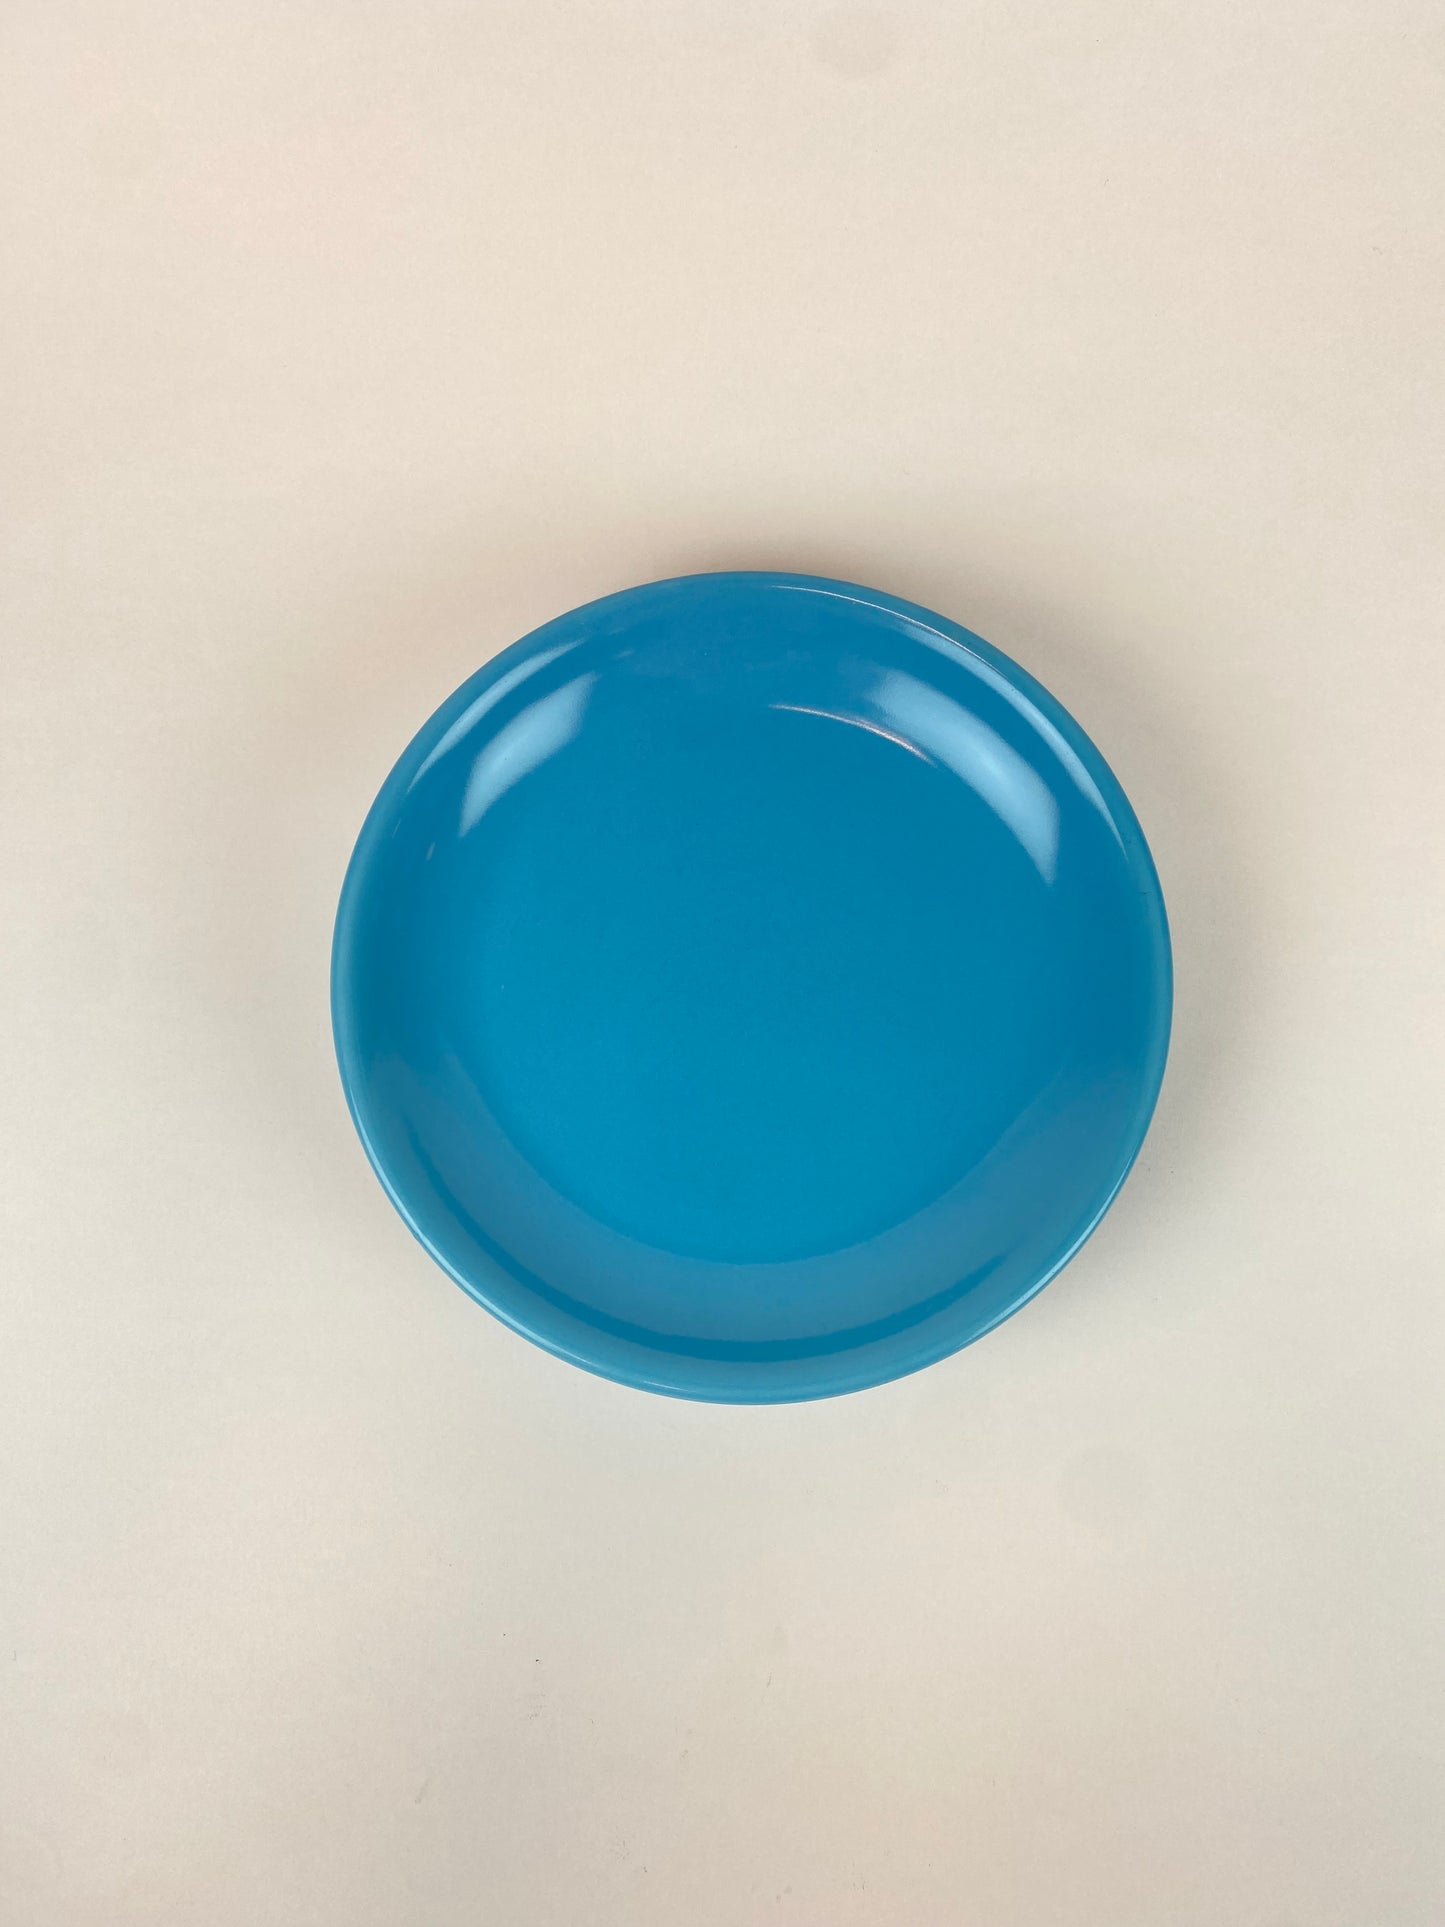 three blue plates